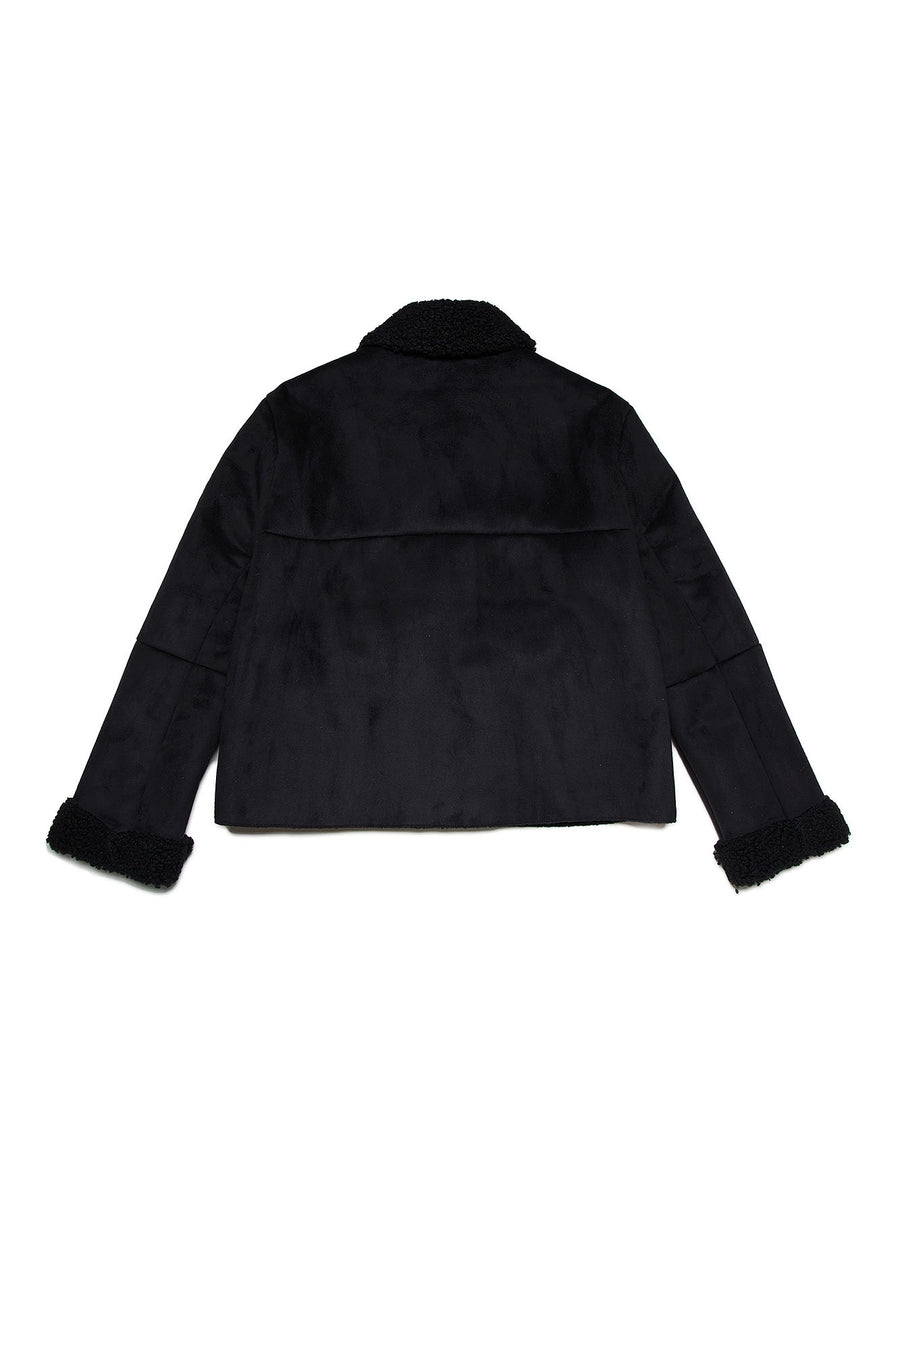 Suede black jacket by Marni